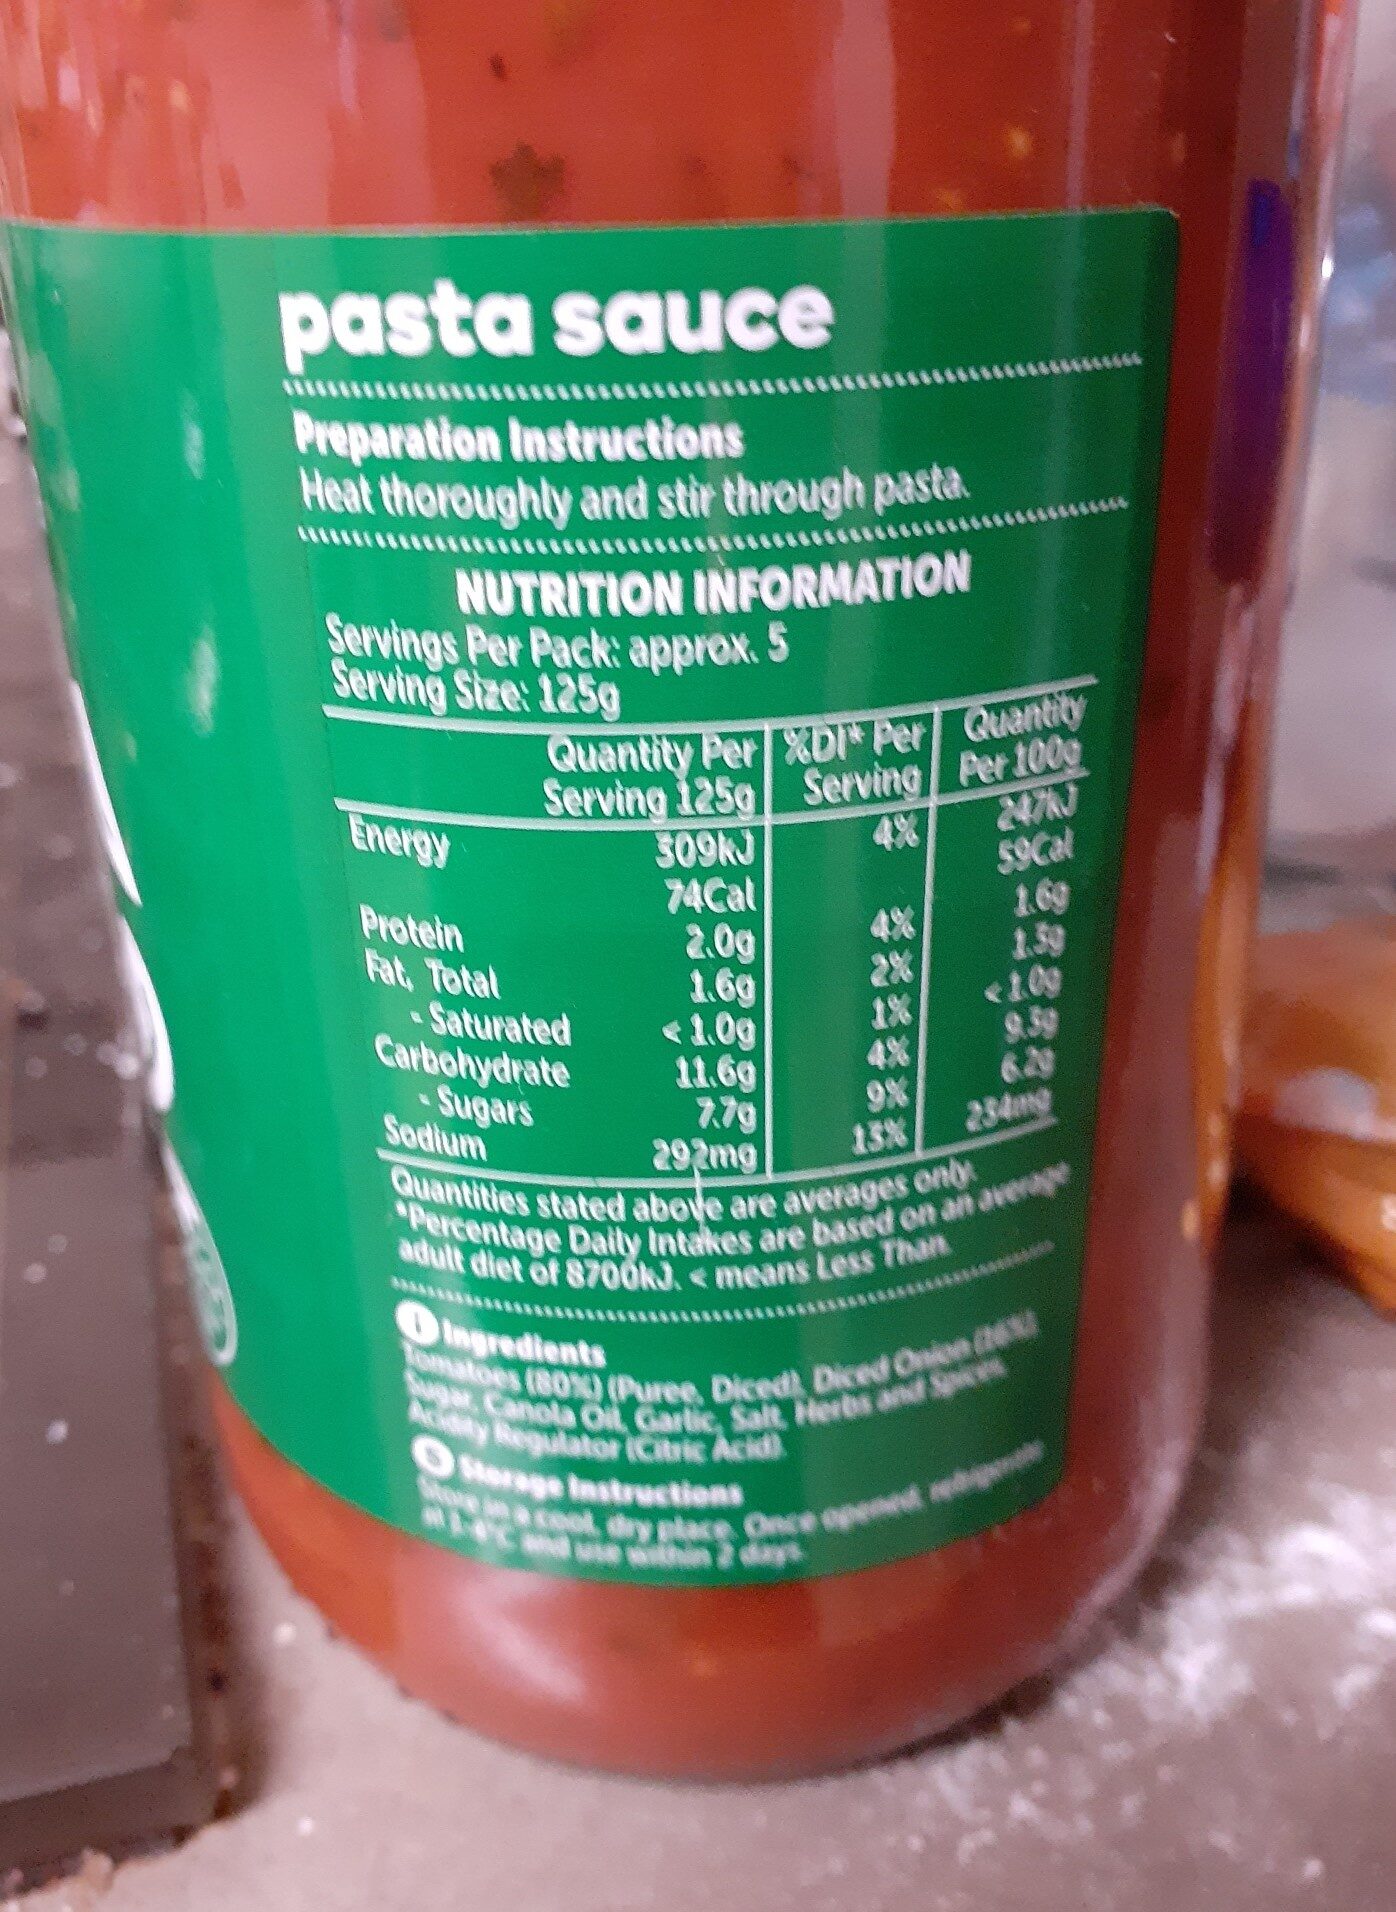 Pasta sauce - Ingredients